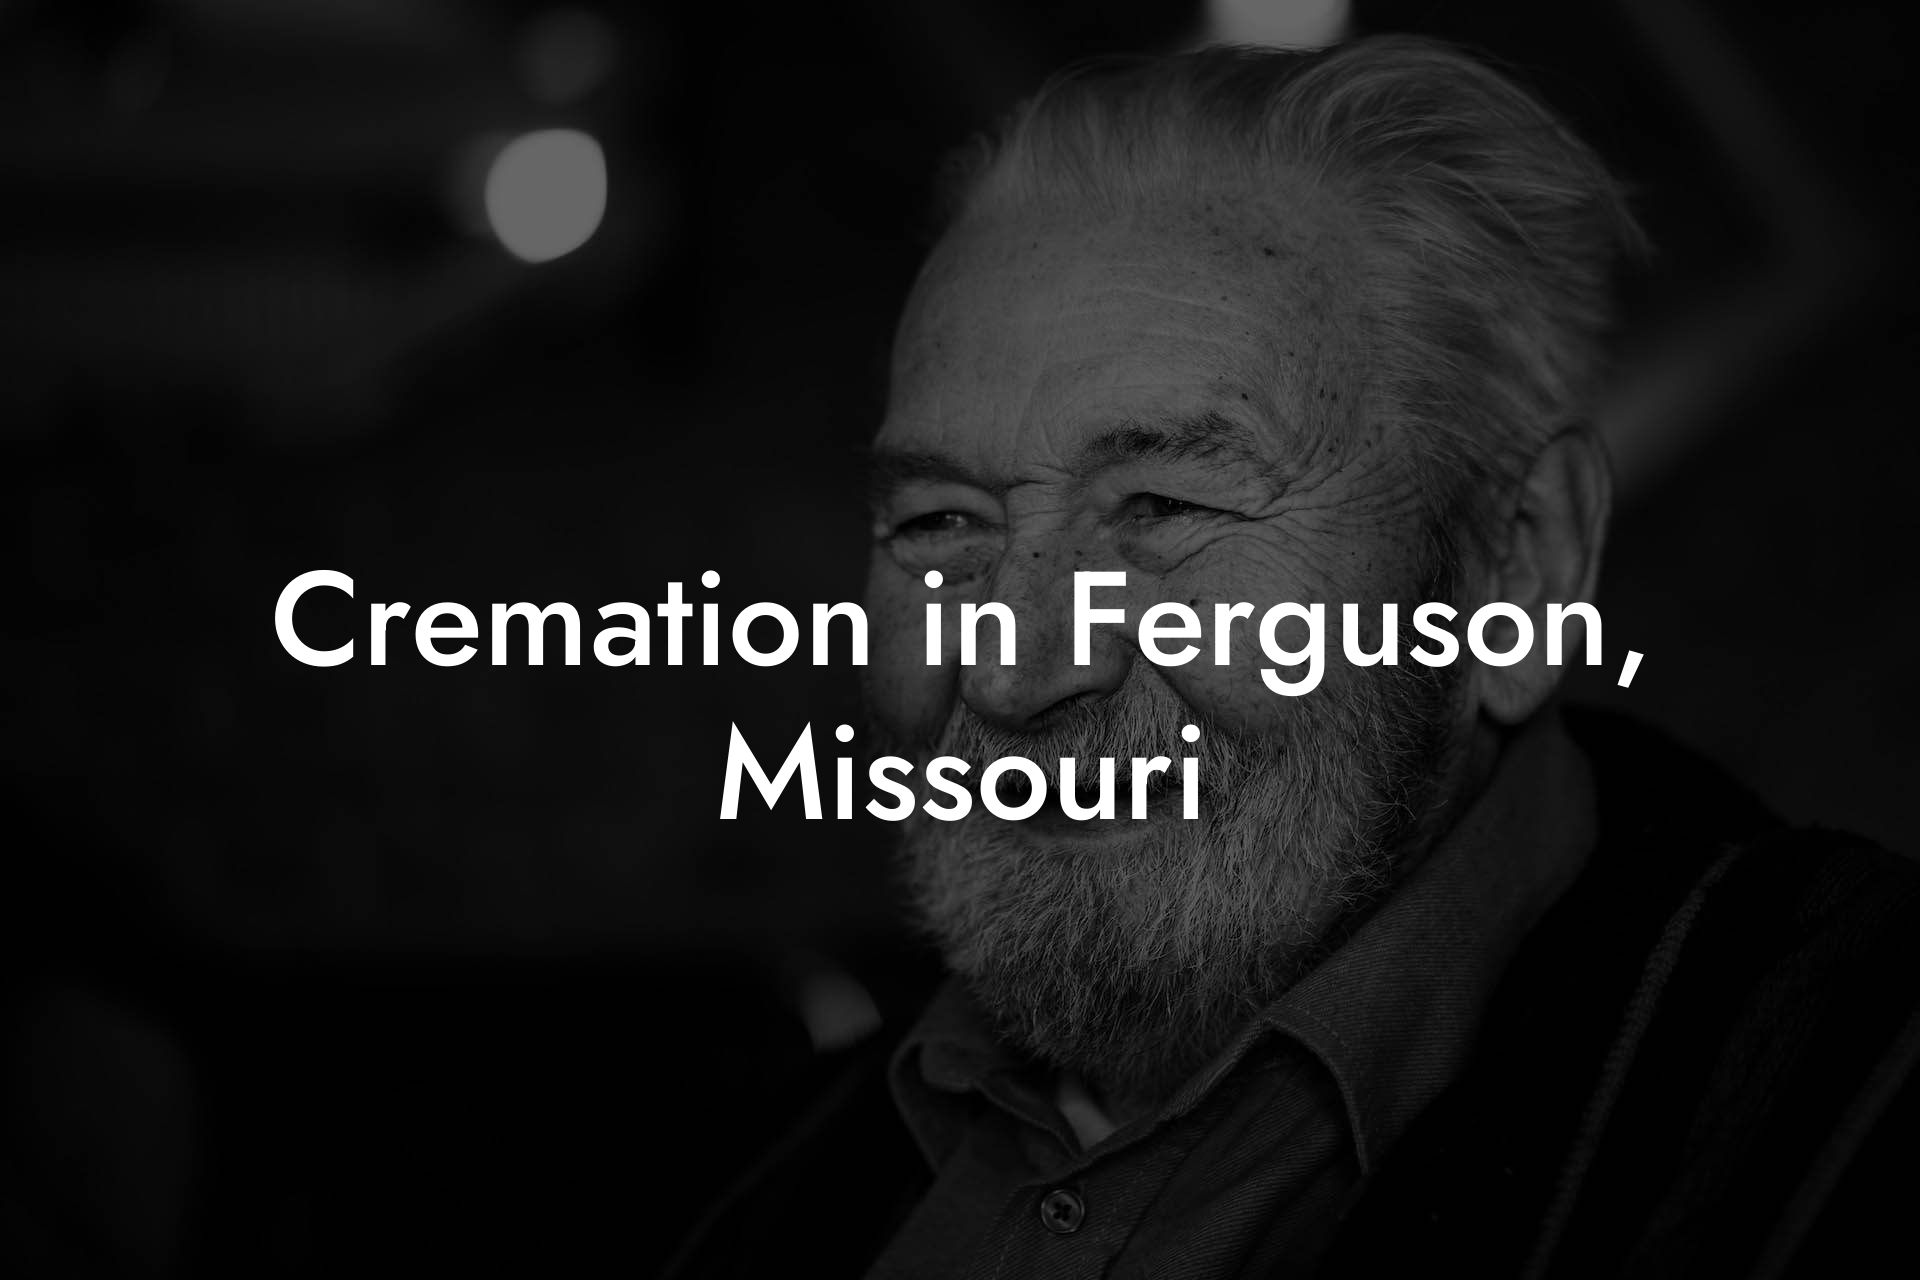 Cremation in Ferguson, Missouri